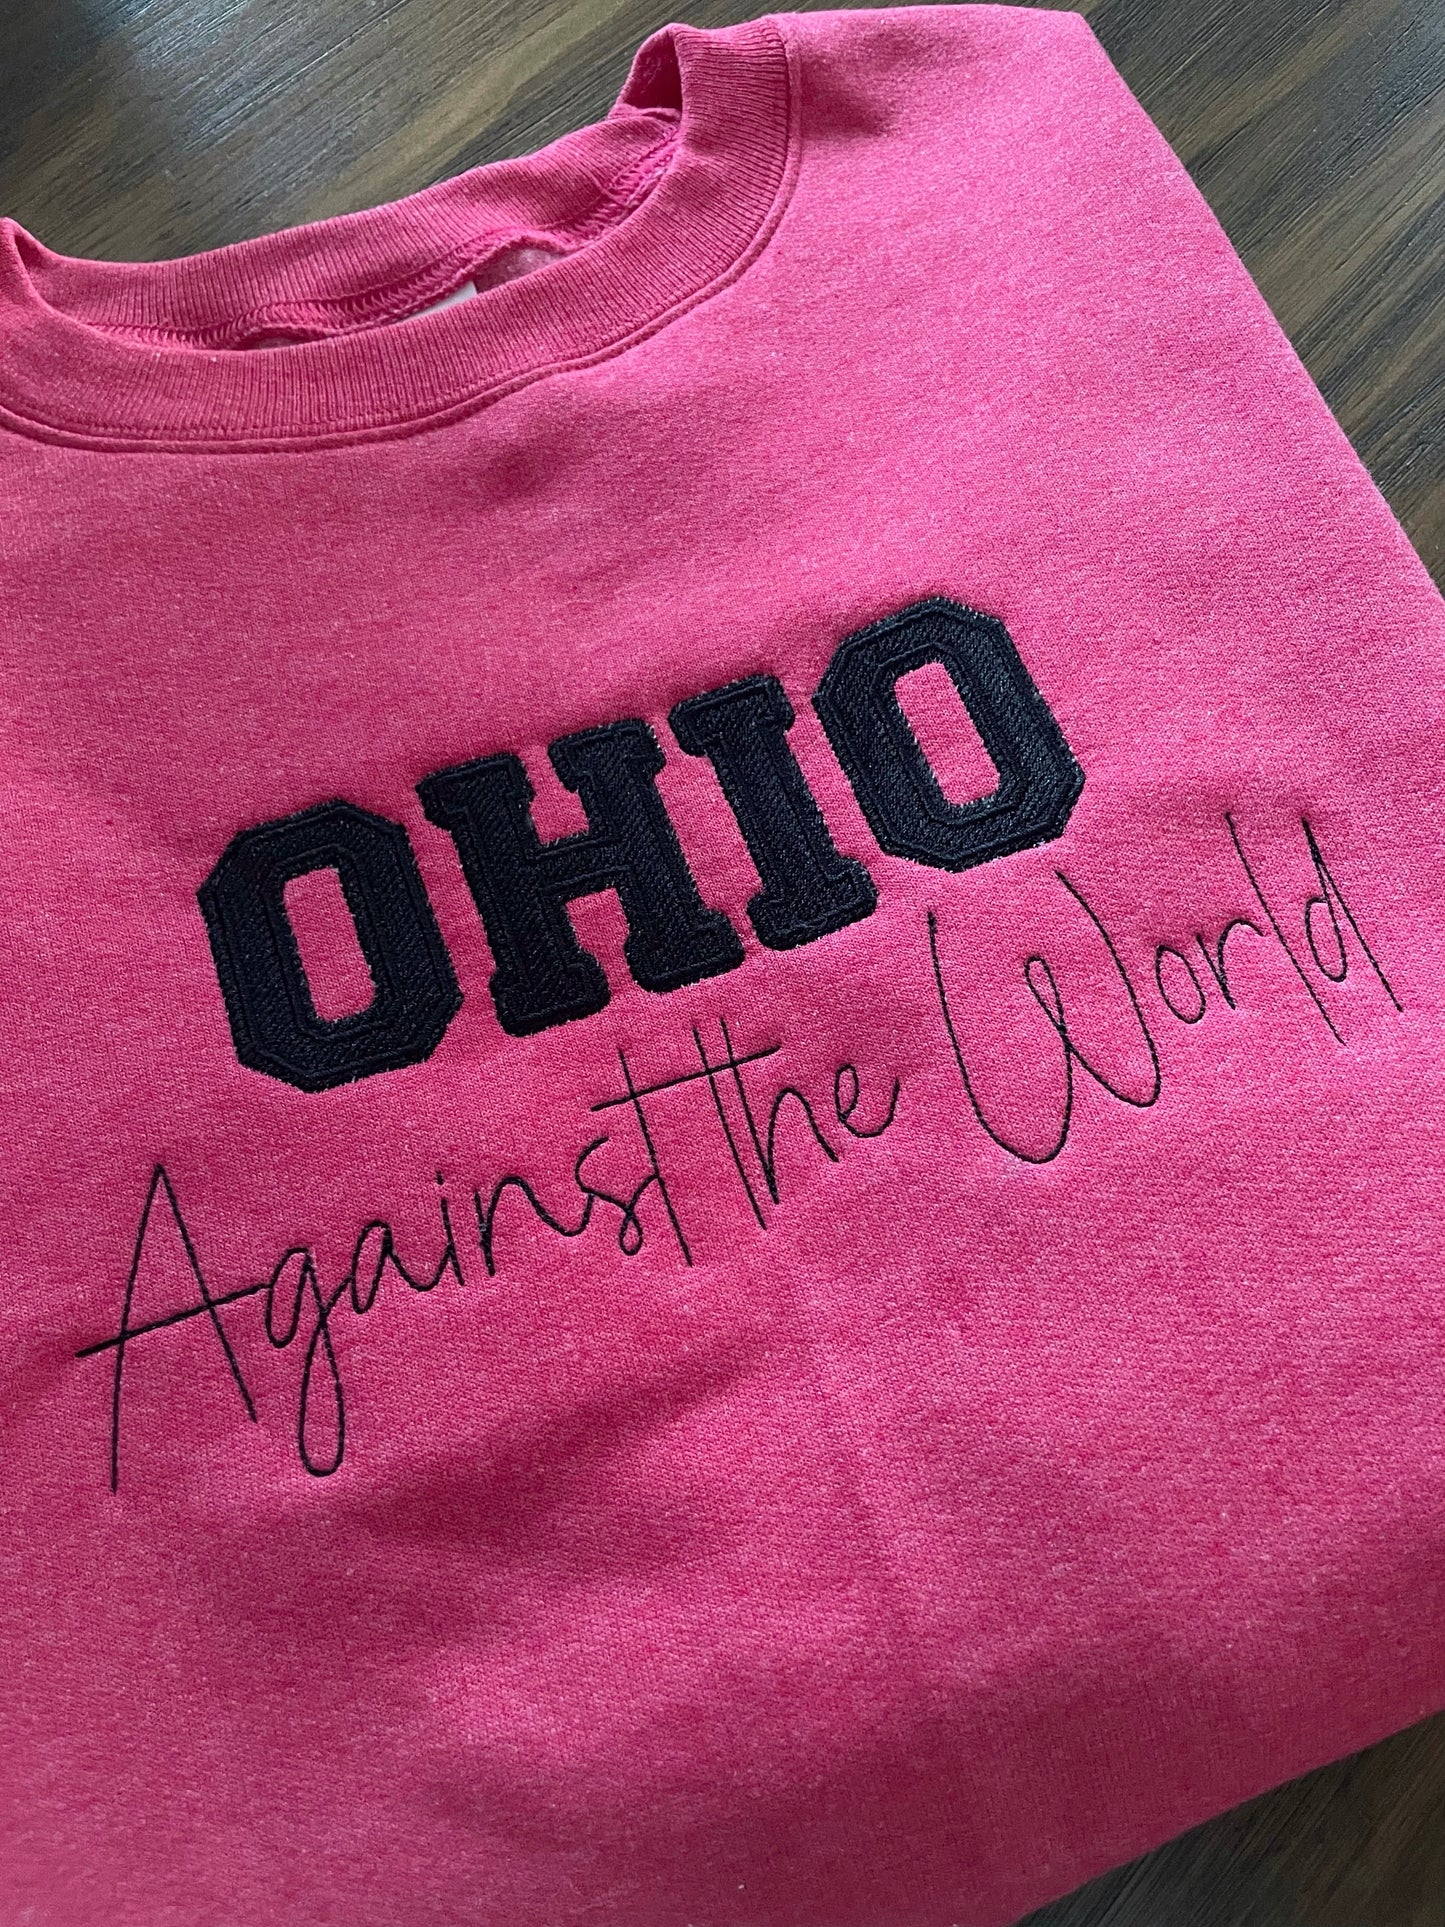 Ohio Against the World